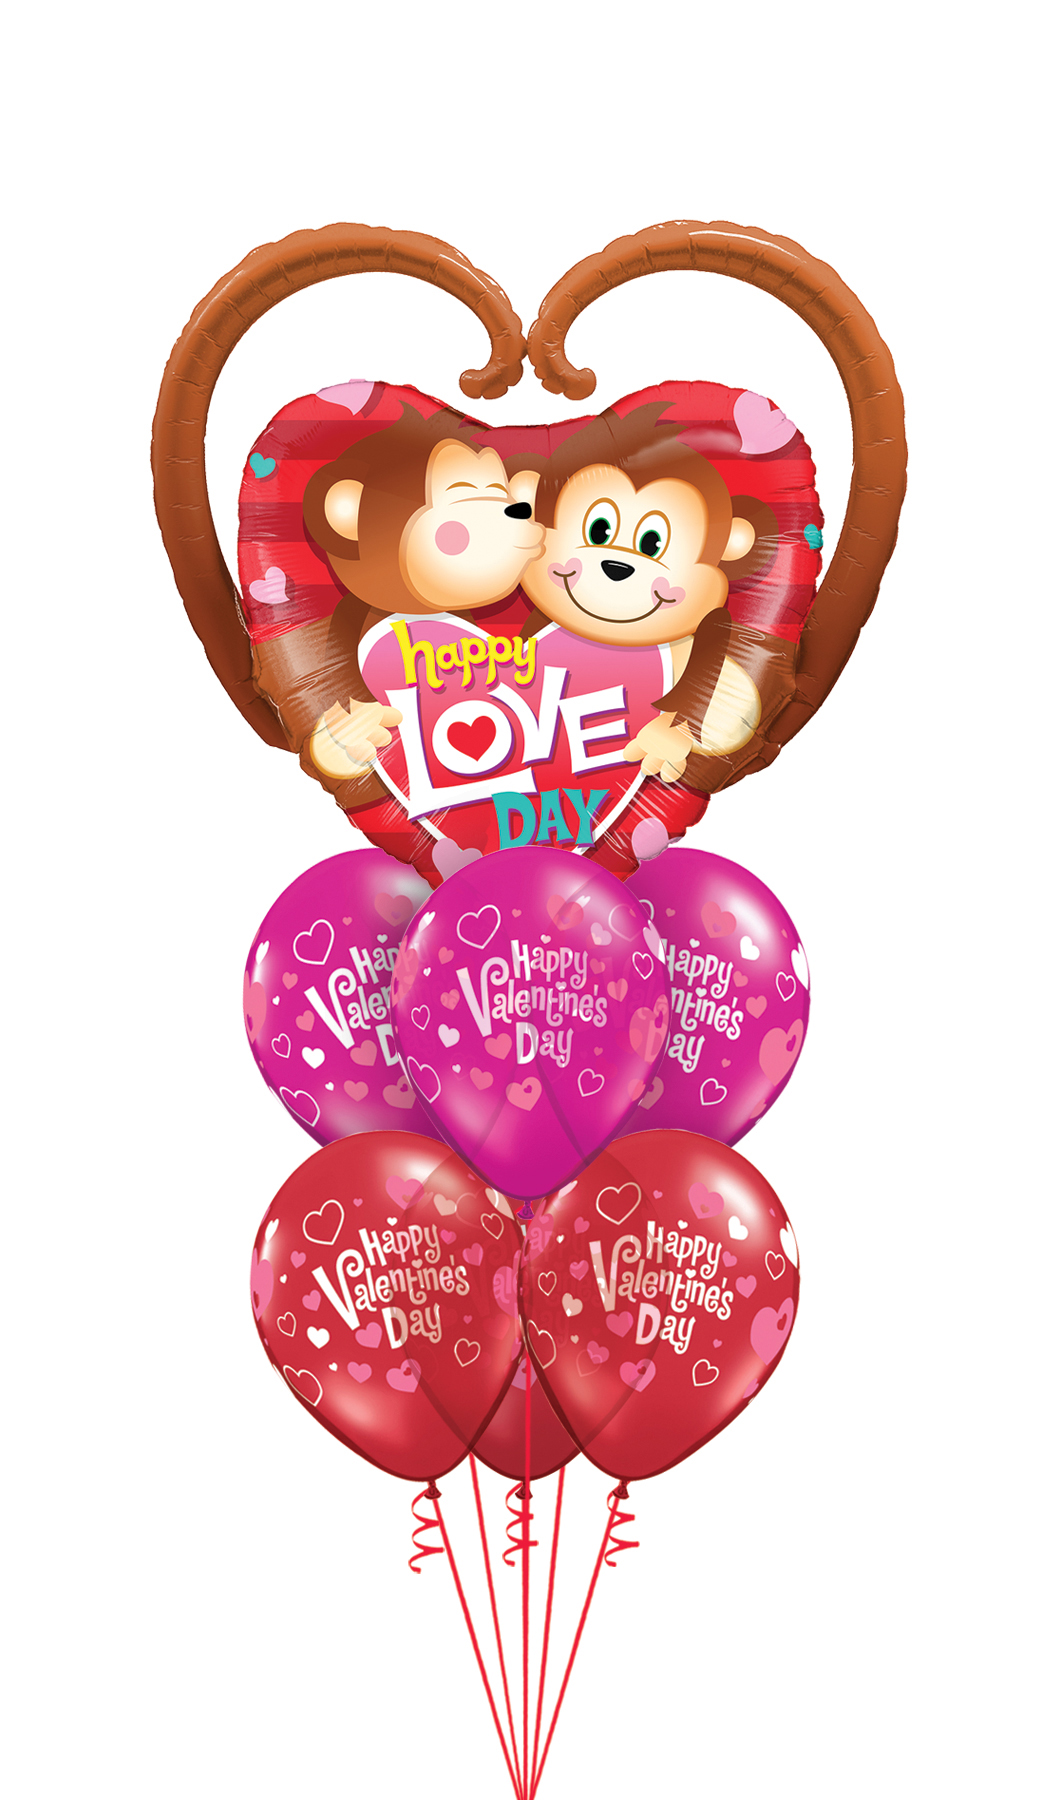 Valentine's Day Balloons!